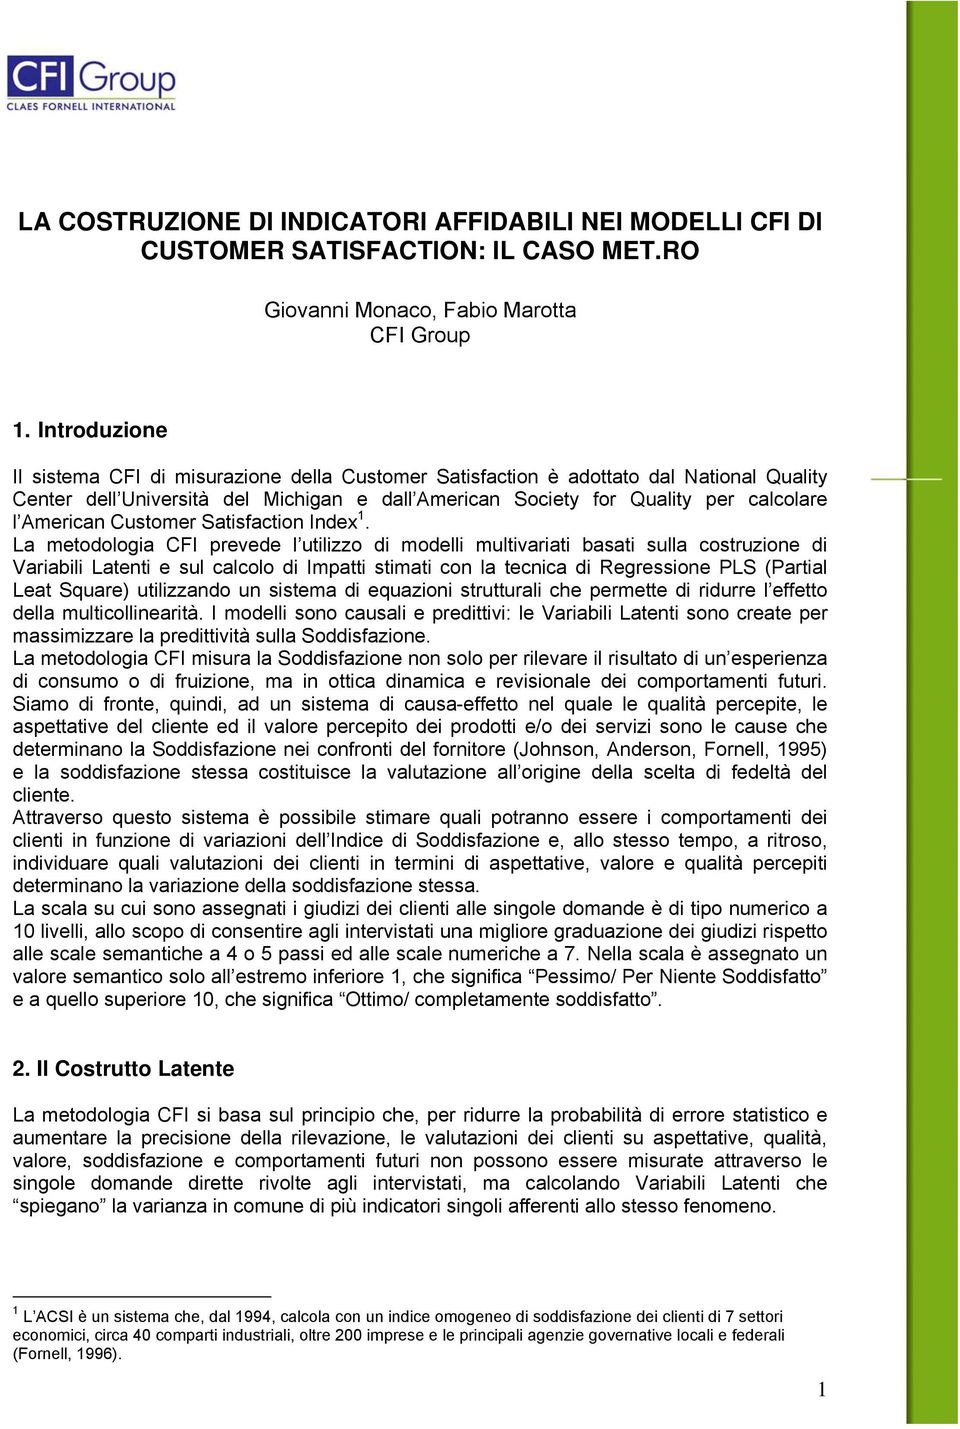 Customer Satisfaction Index 1.